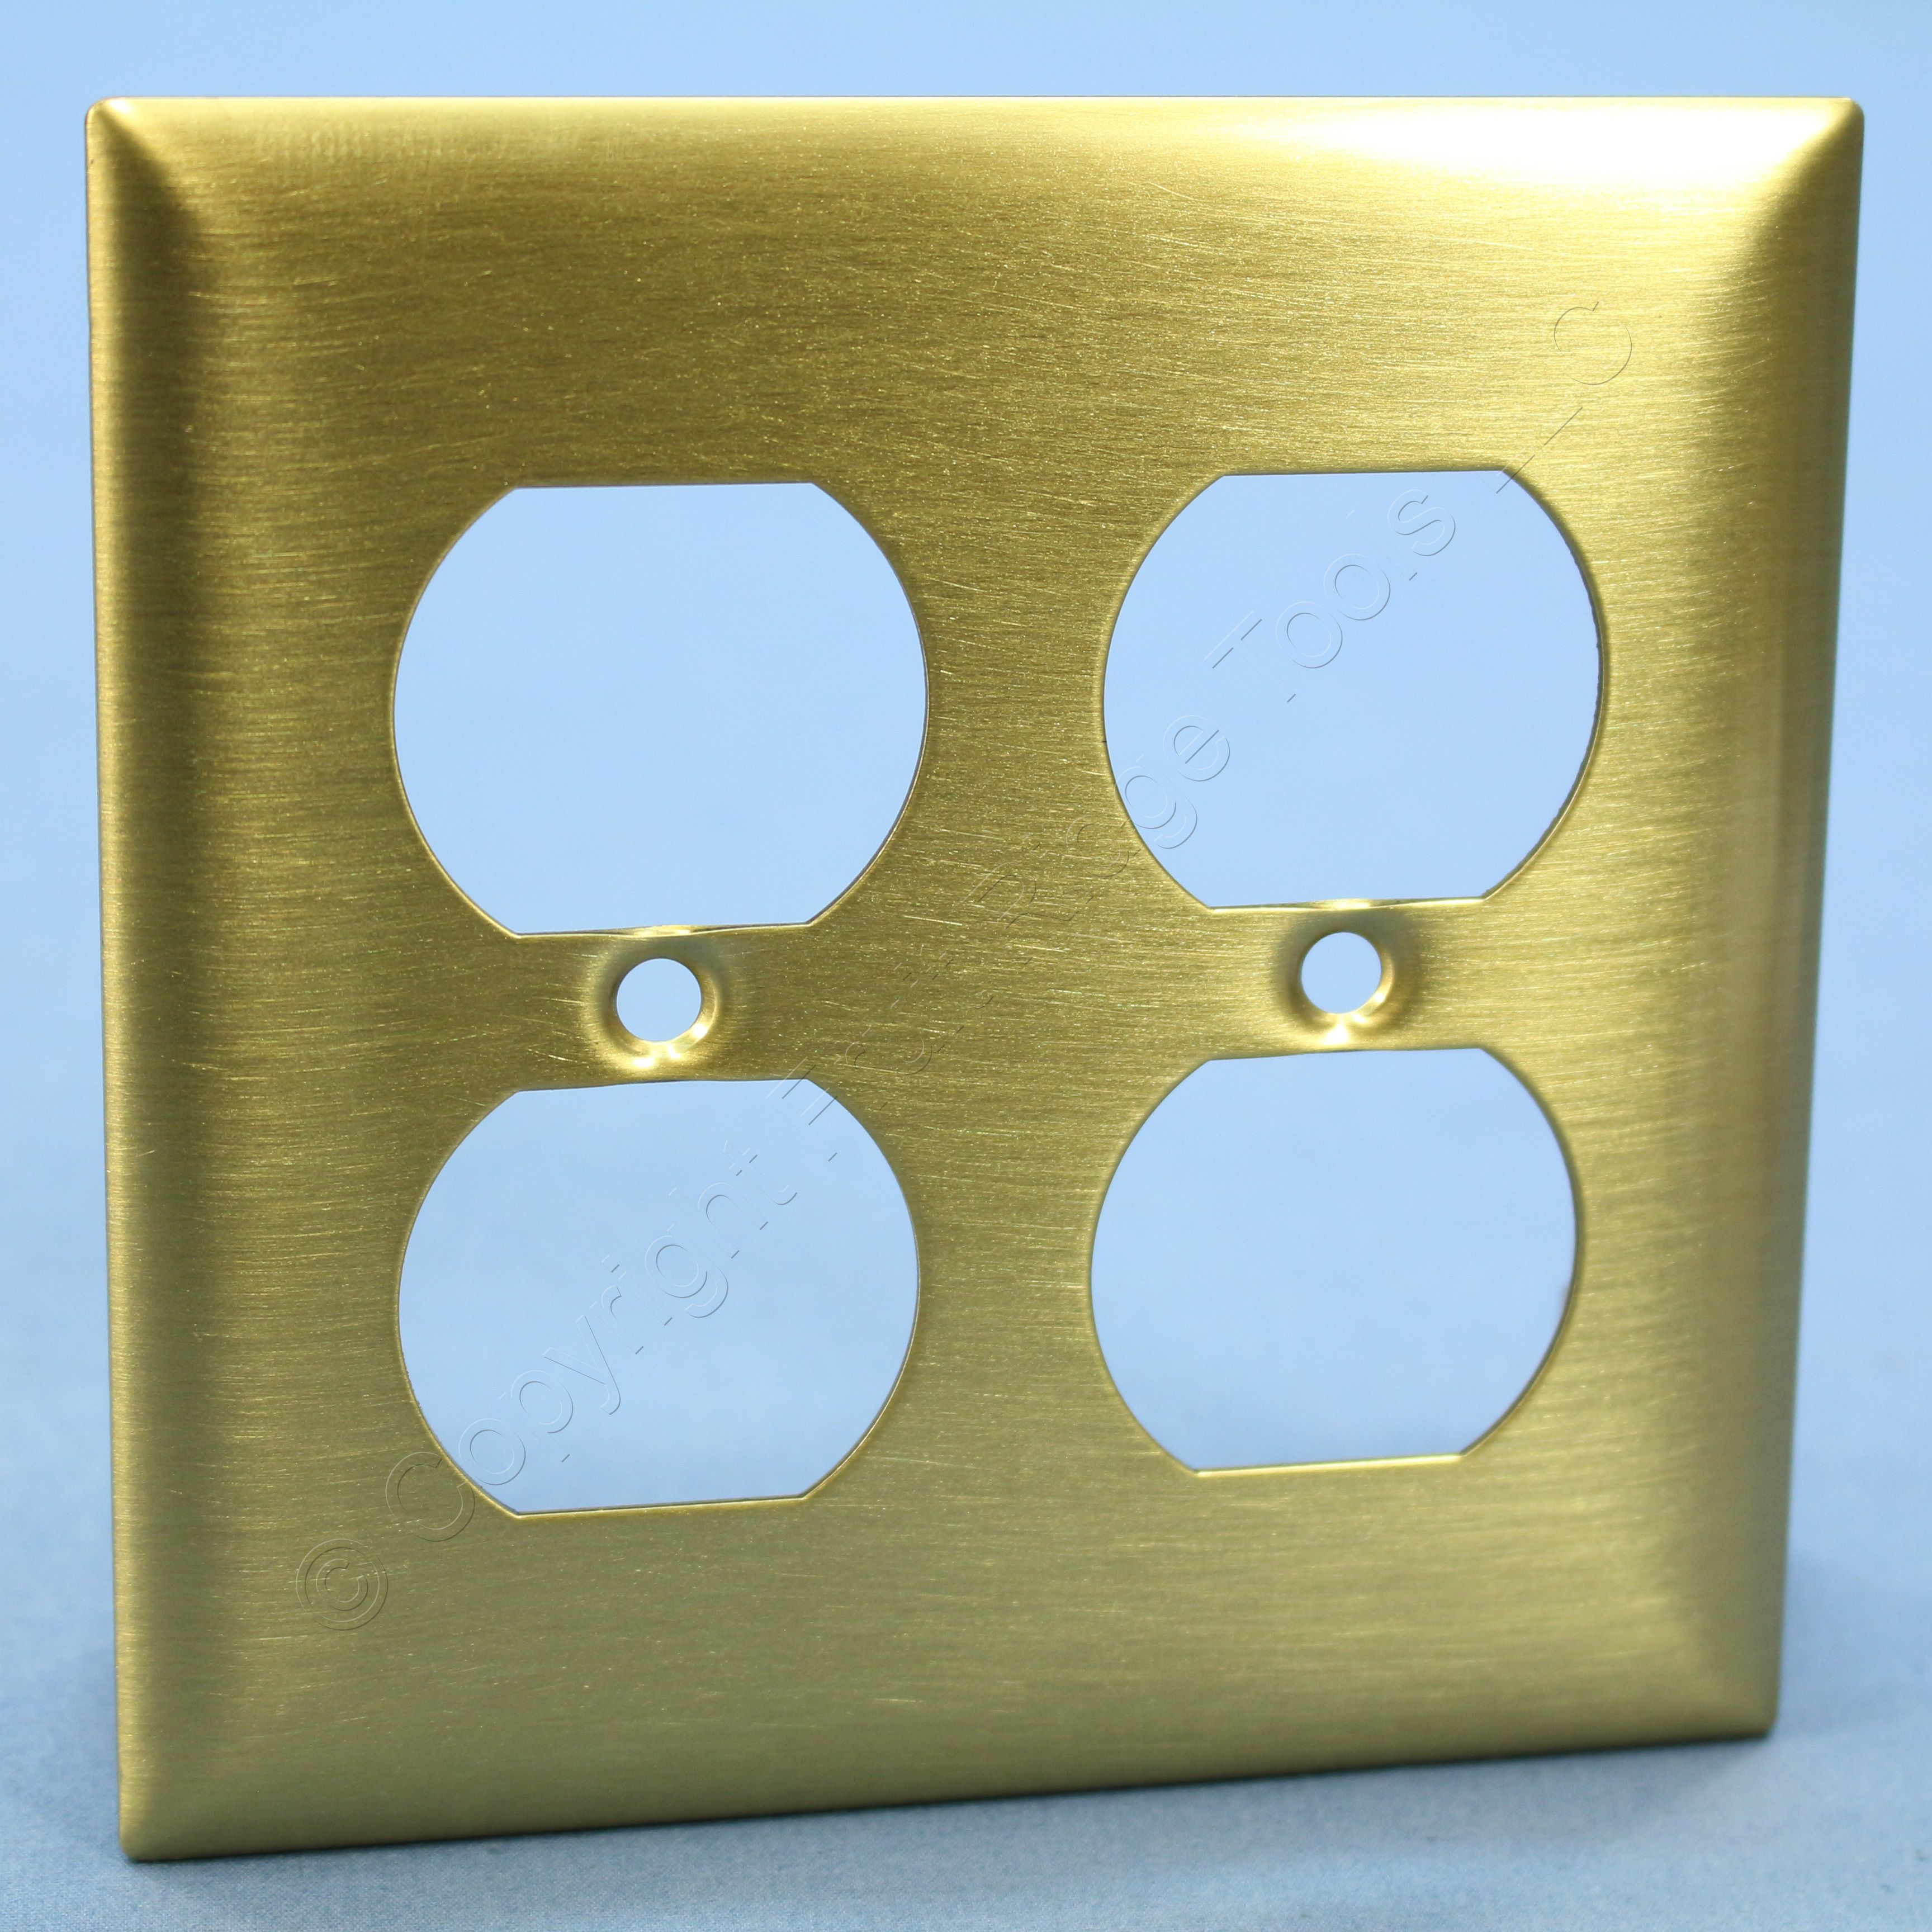 Hubbell Smooth Brass Standard 2Gang Duplex Receptacle Wallplate Cover SB82PB 883778200311 eBay